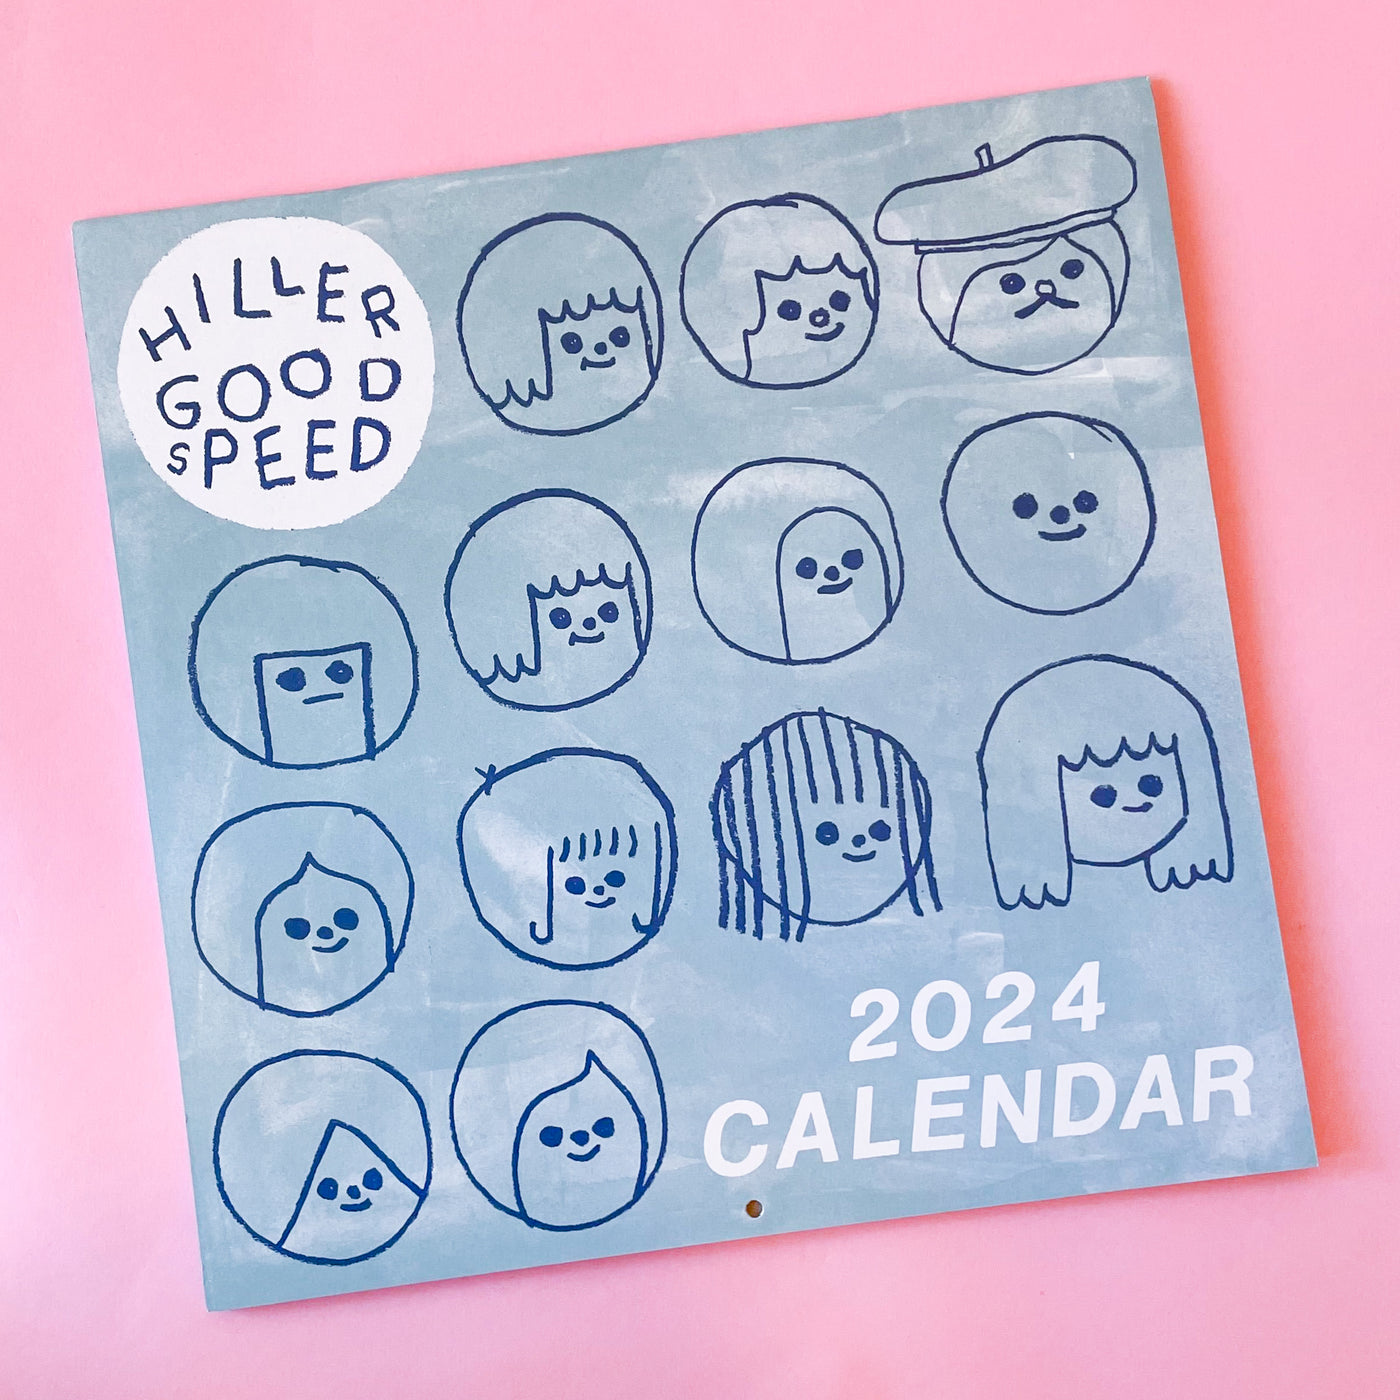 Hiller Goodspeed - 2024 Calendar For Your Walls